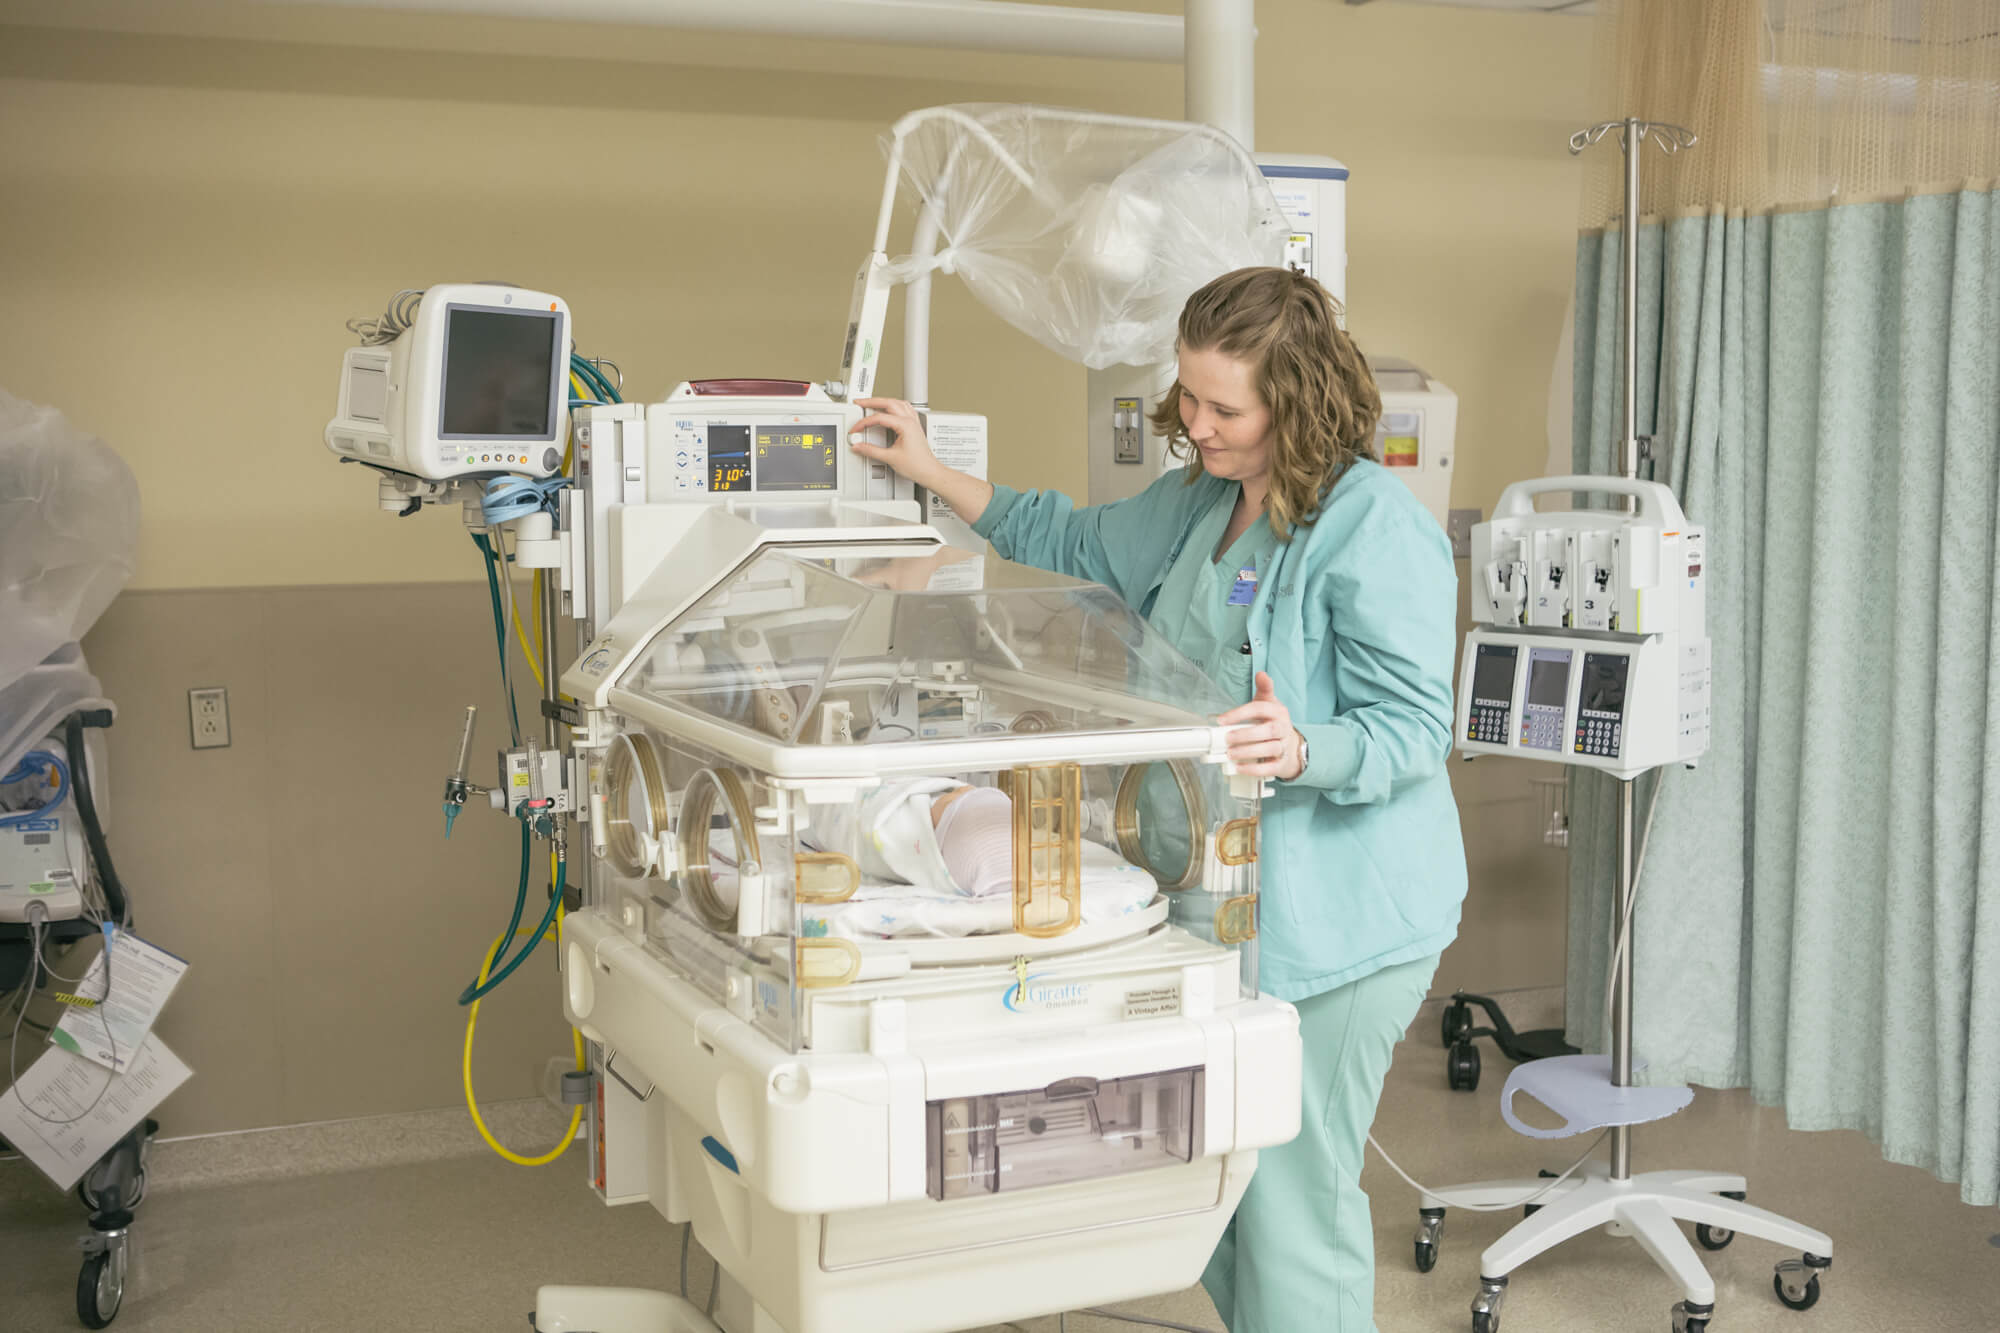 NICU2 image with nurse over baby